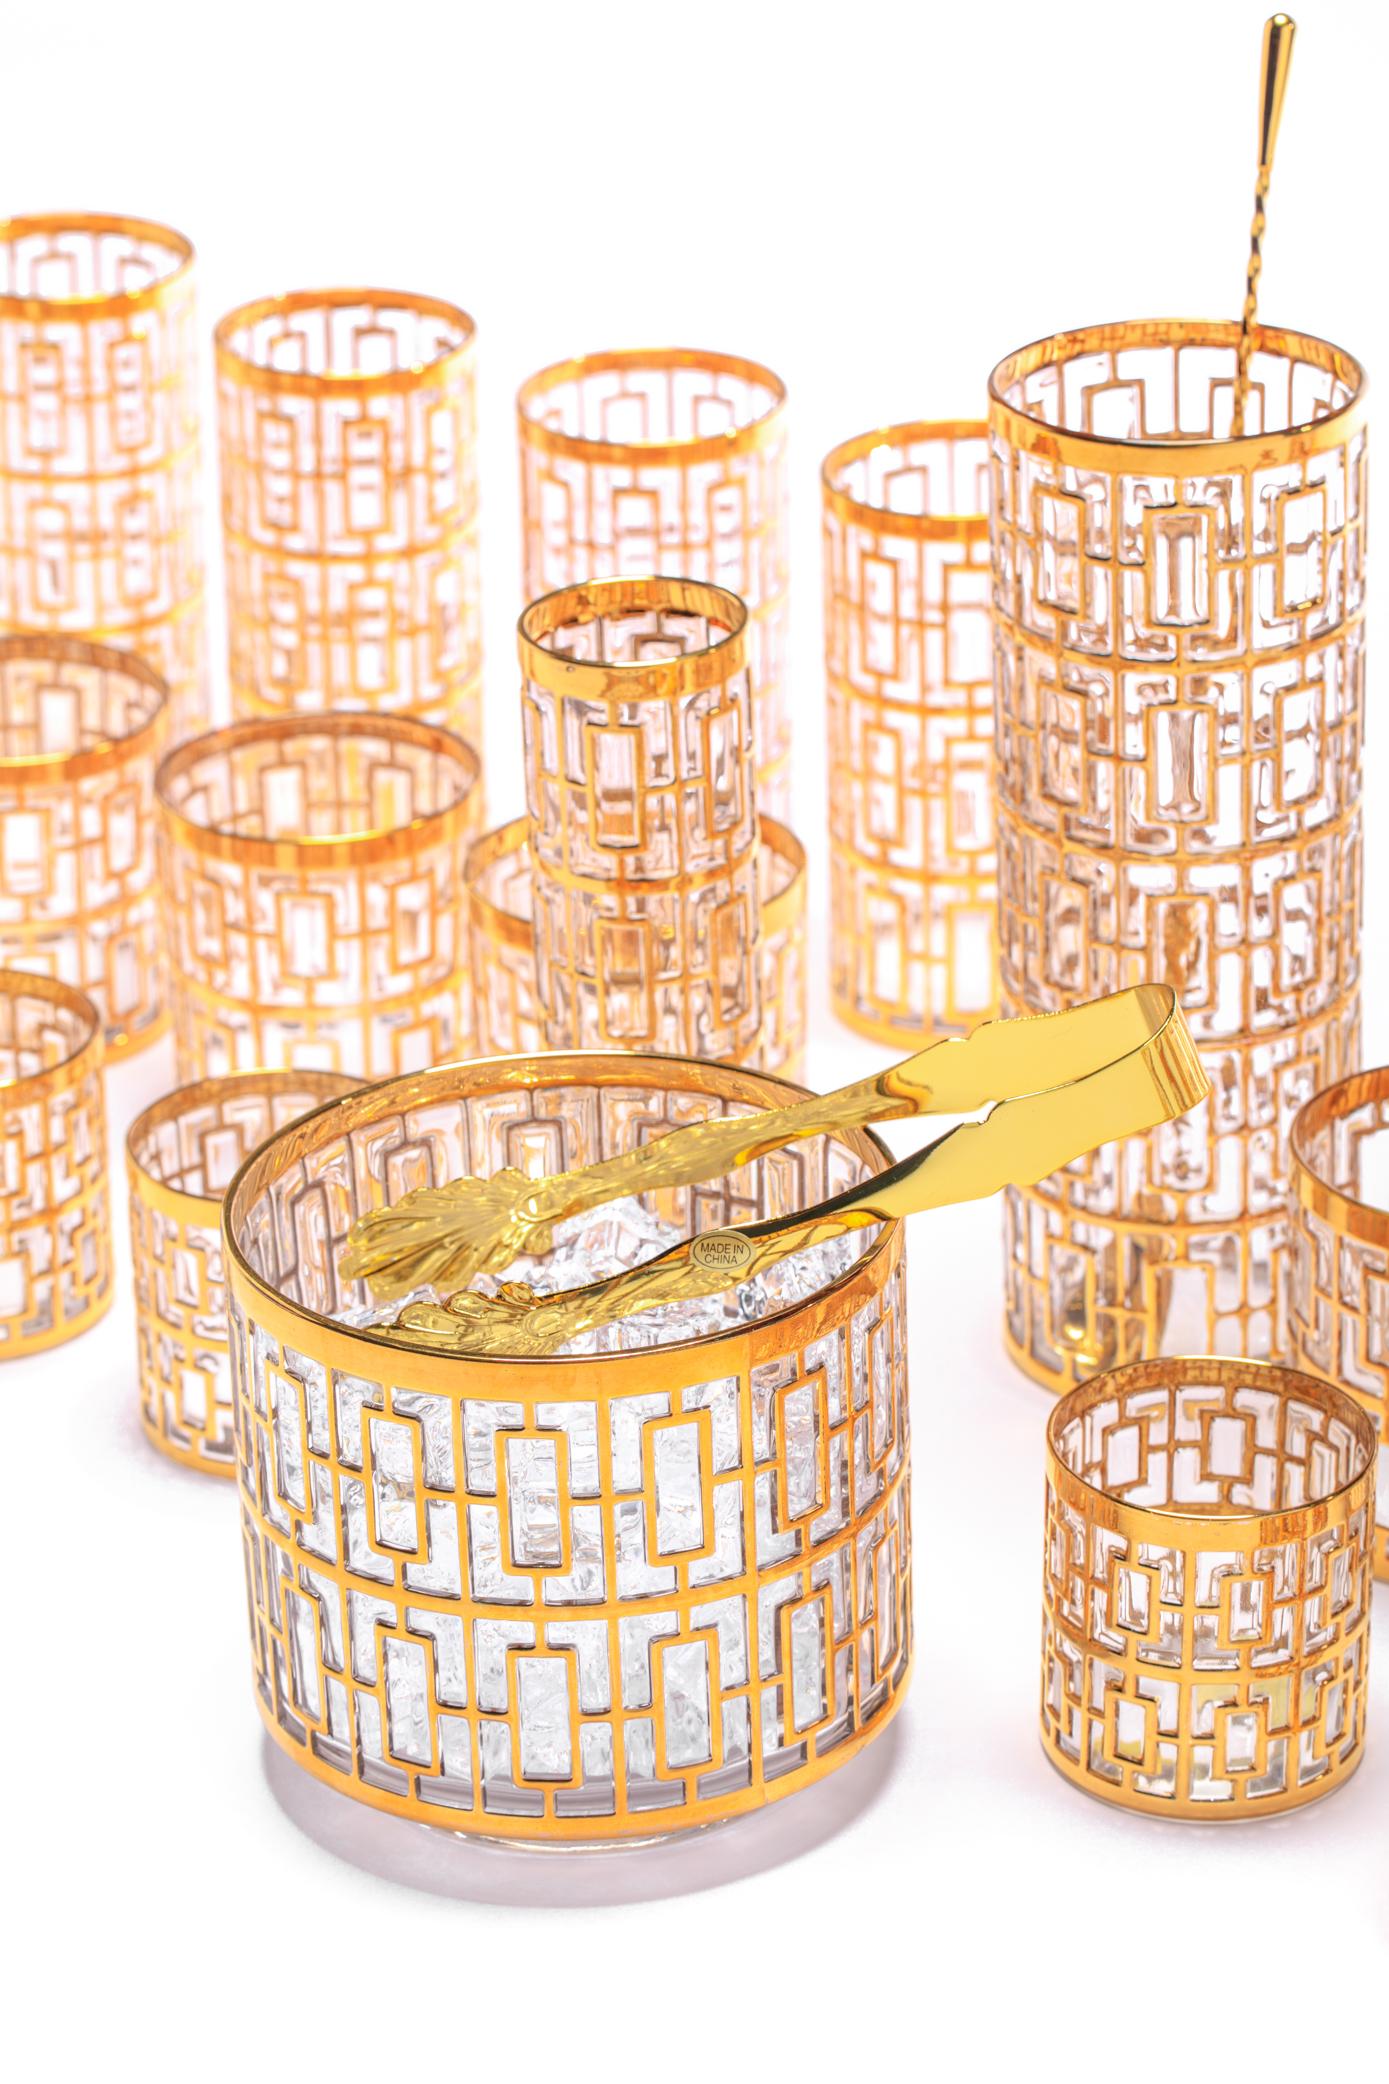 American Vintage Imperial Glass Co. Shoji Hospitality Bowl 22-Karat Gold, 1960s For Sale